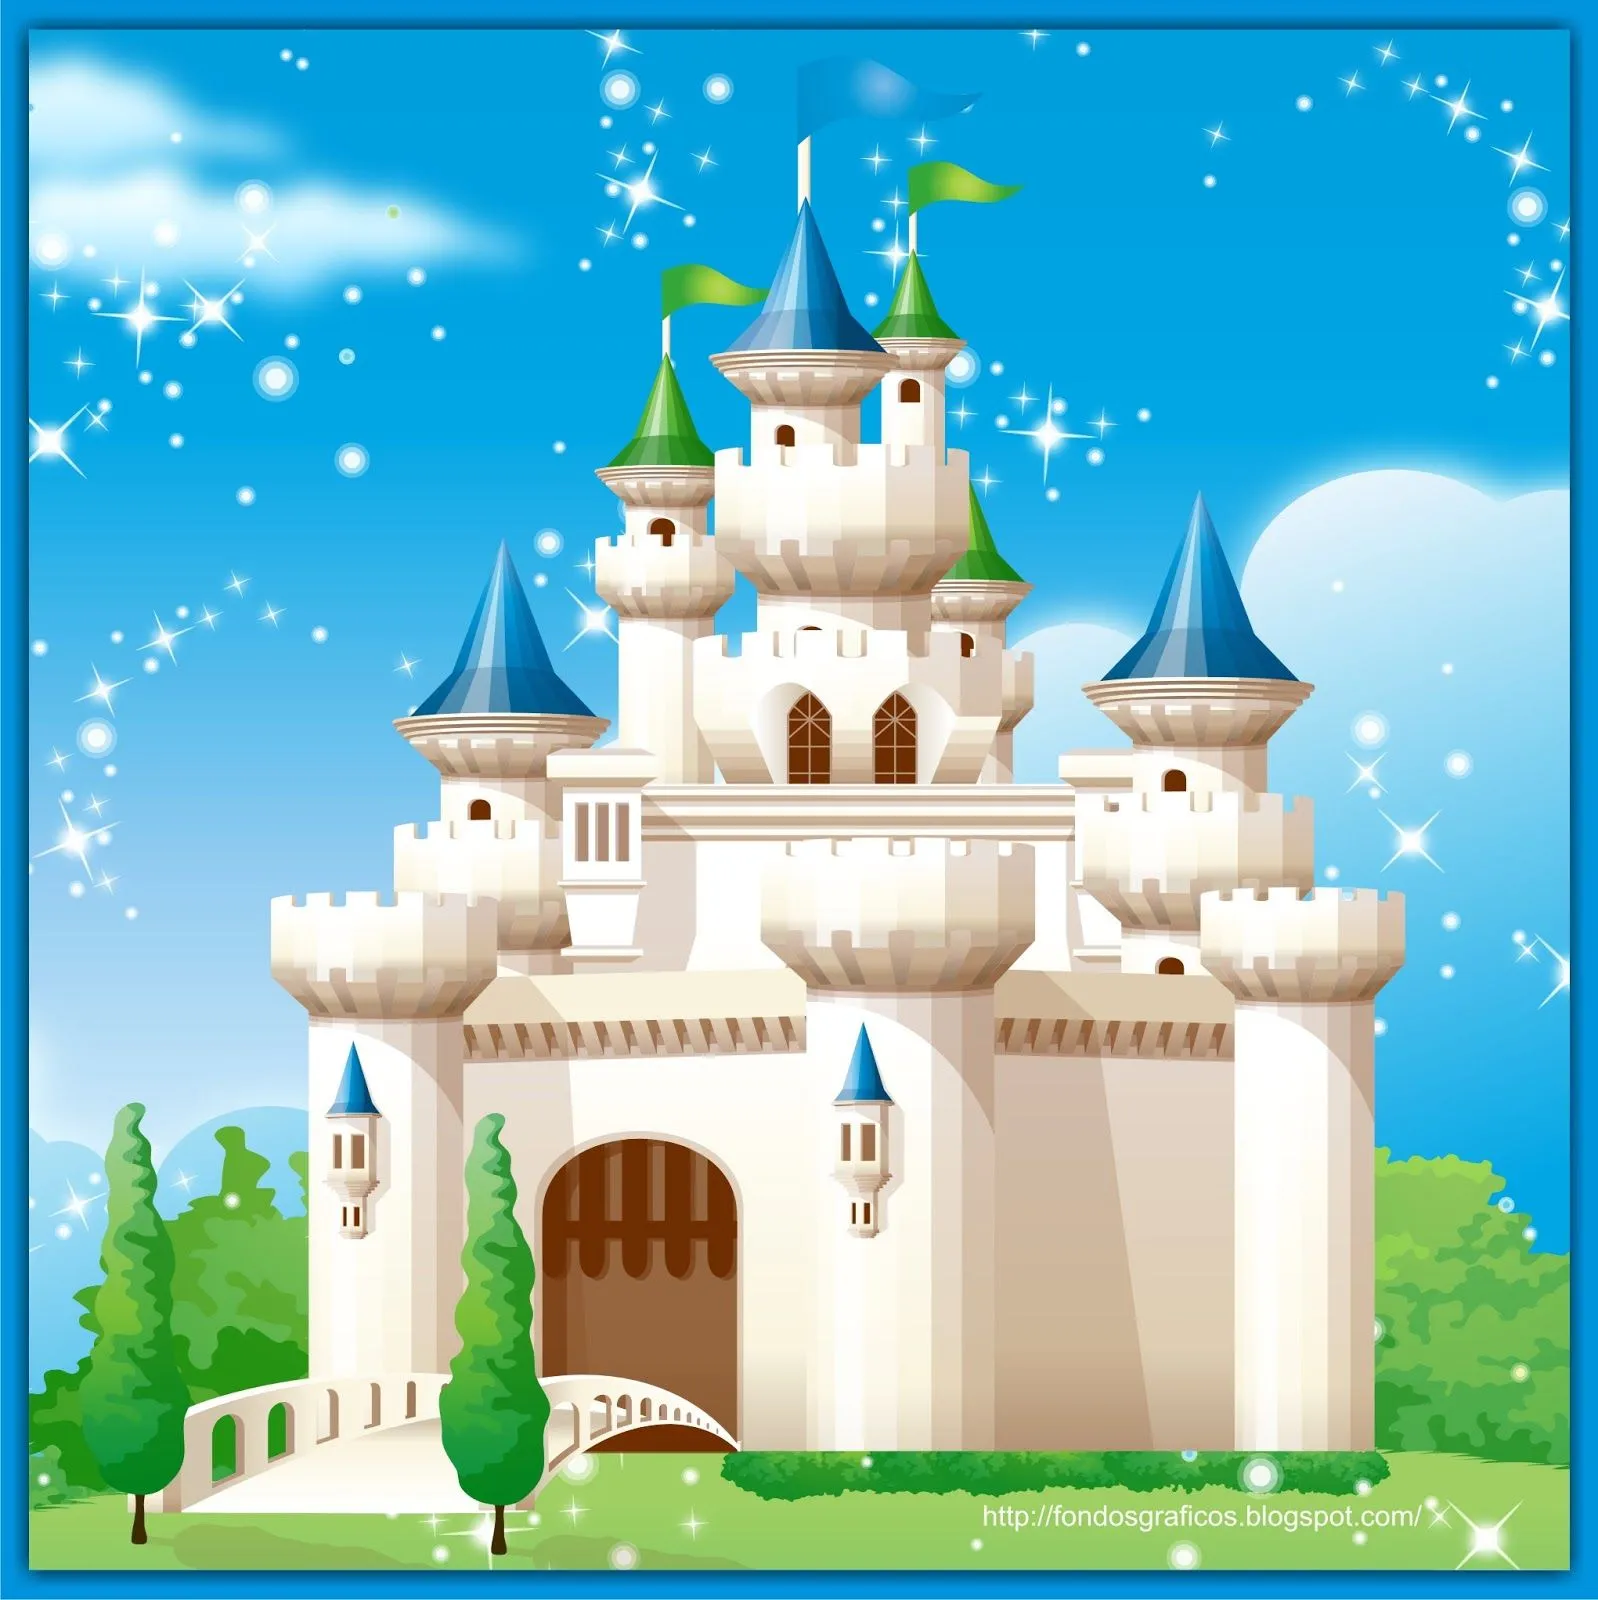 Fondos de castillo Disney - Imagui